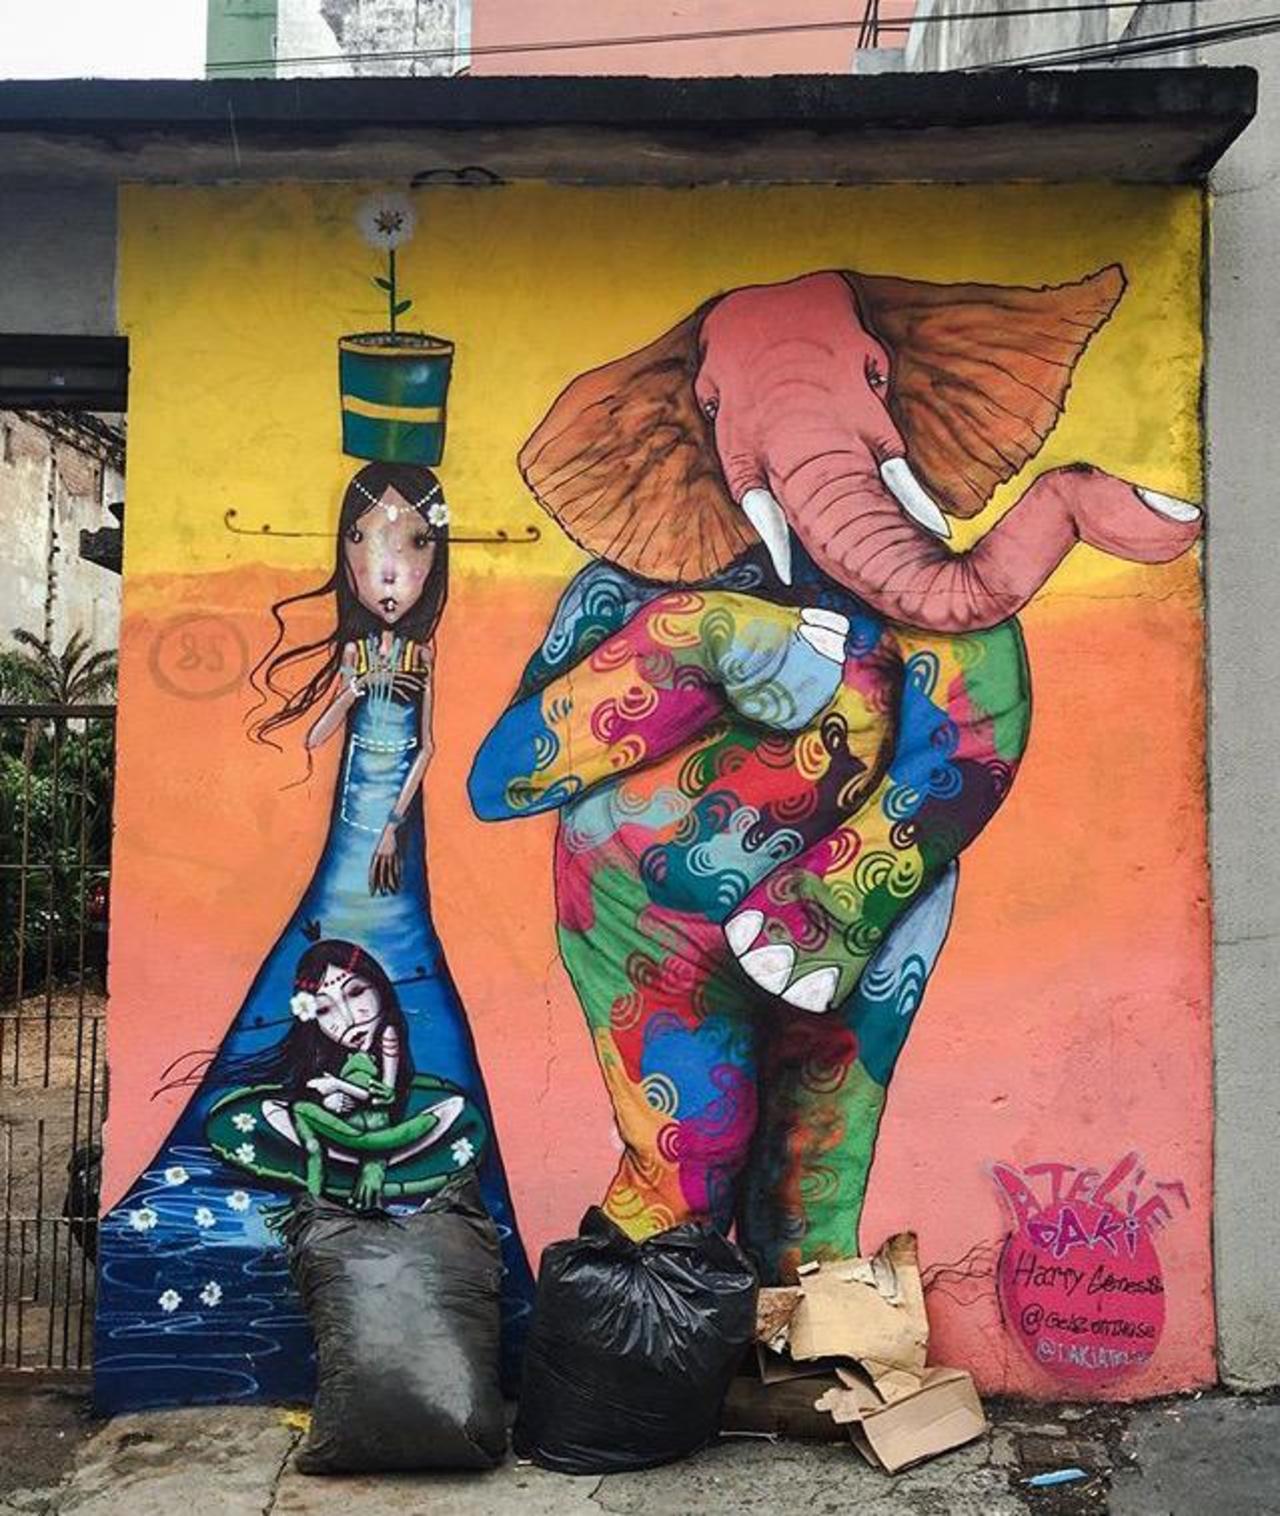 Street Art by Harry Geneis & Gelson in São Paulo #art #mural #graffiti #streetart http://t.co/SlLbhuMZfD … … …… … http://twitter.com/charlesjackso14/status/648021540781588480